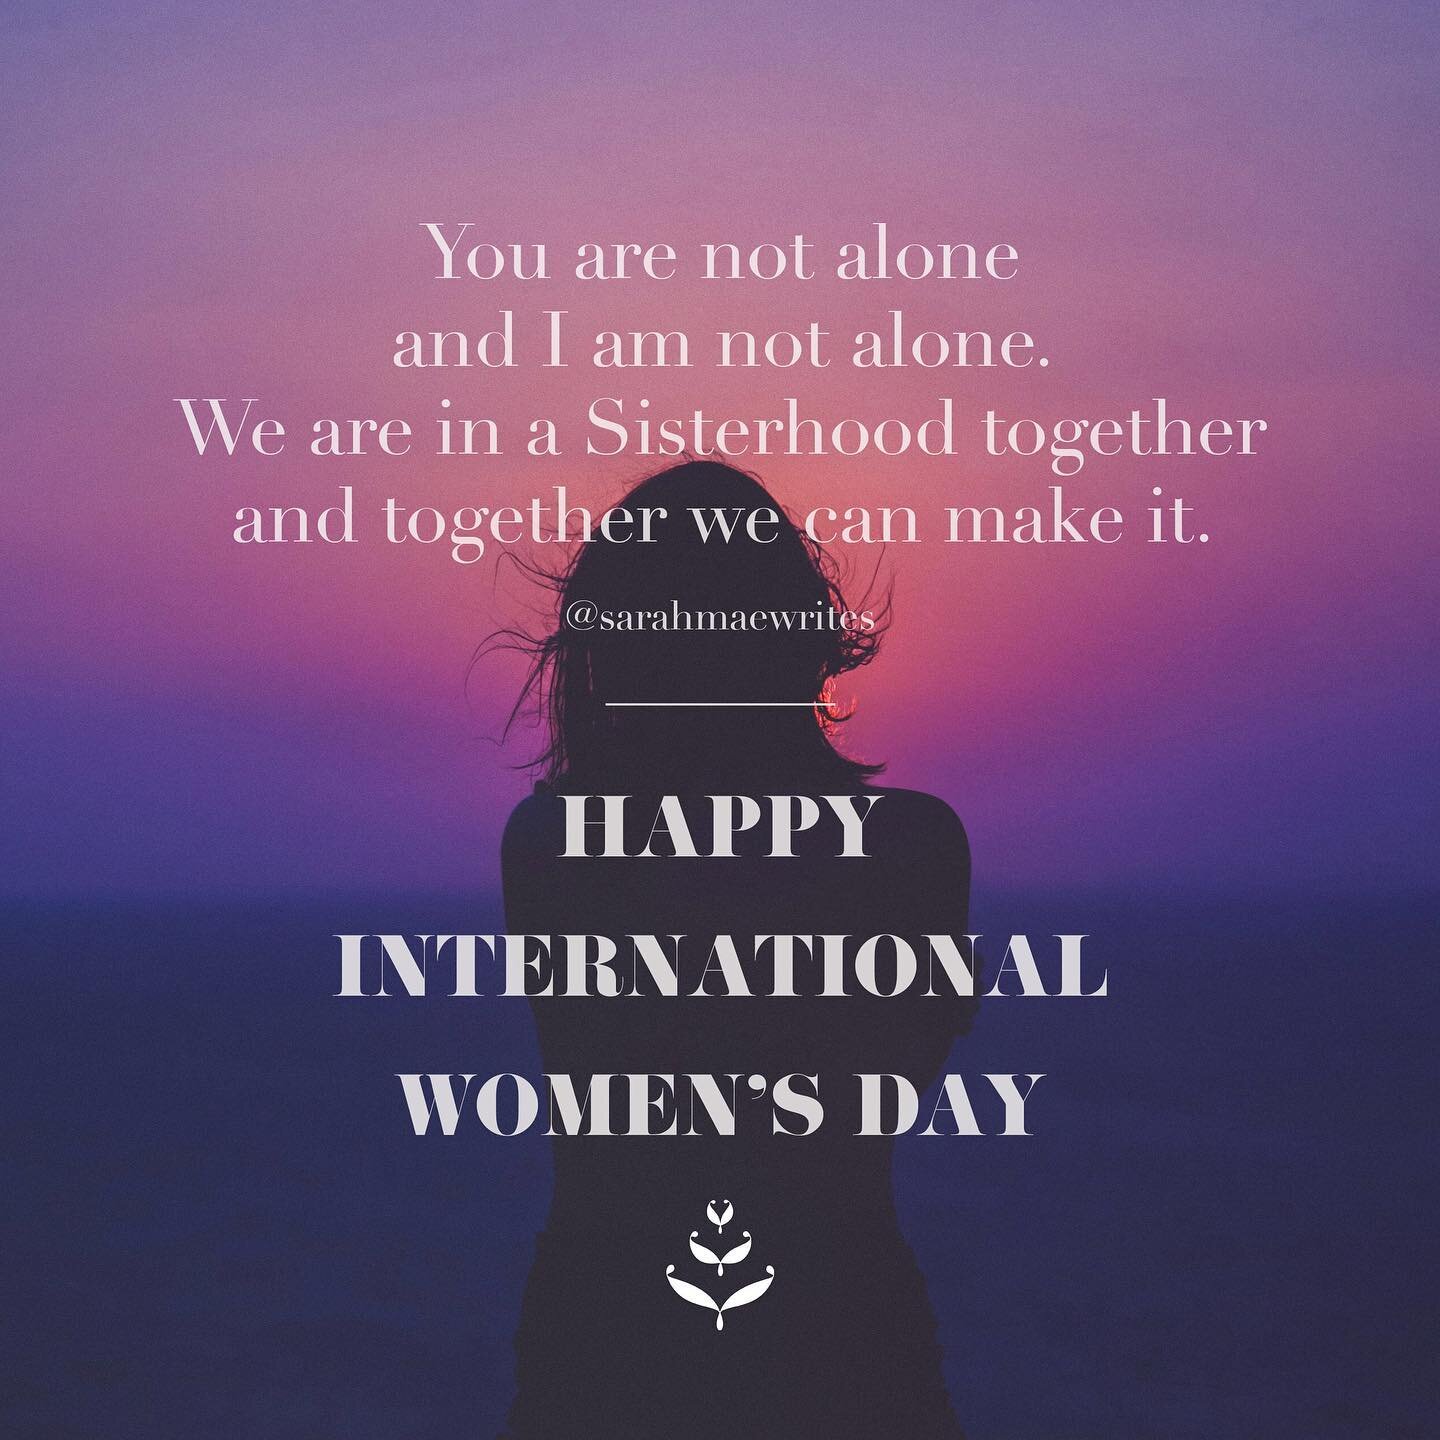 #sisterhood #internationalwomensday 
@livelorelai